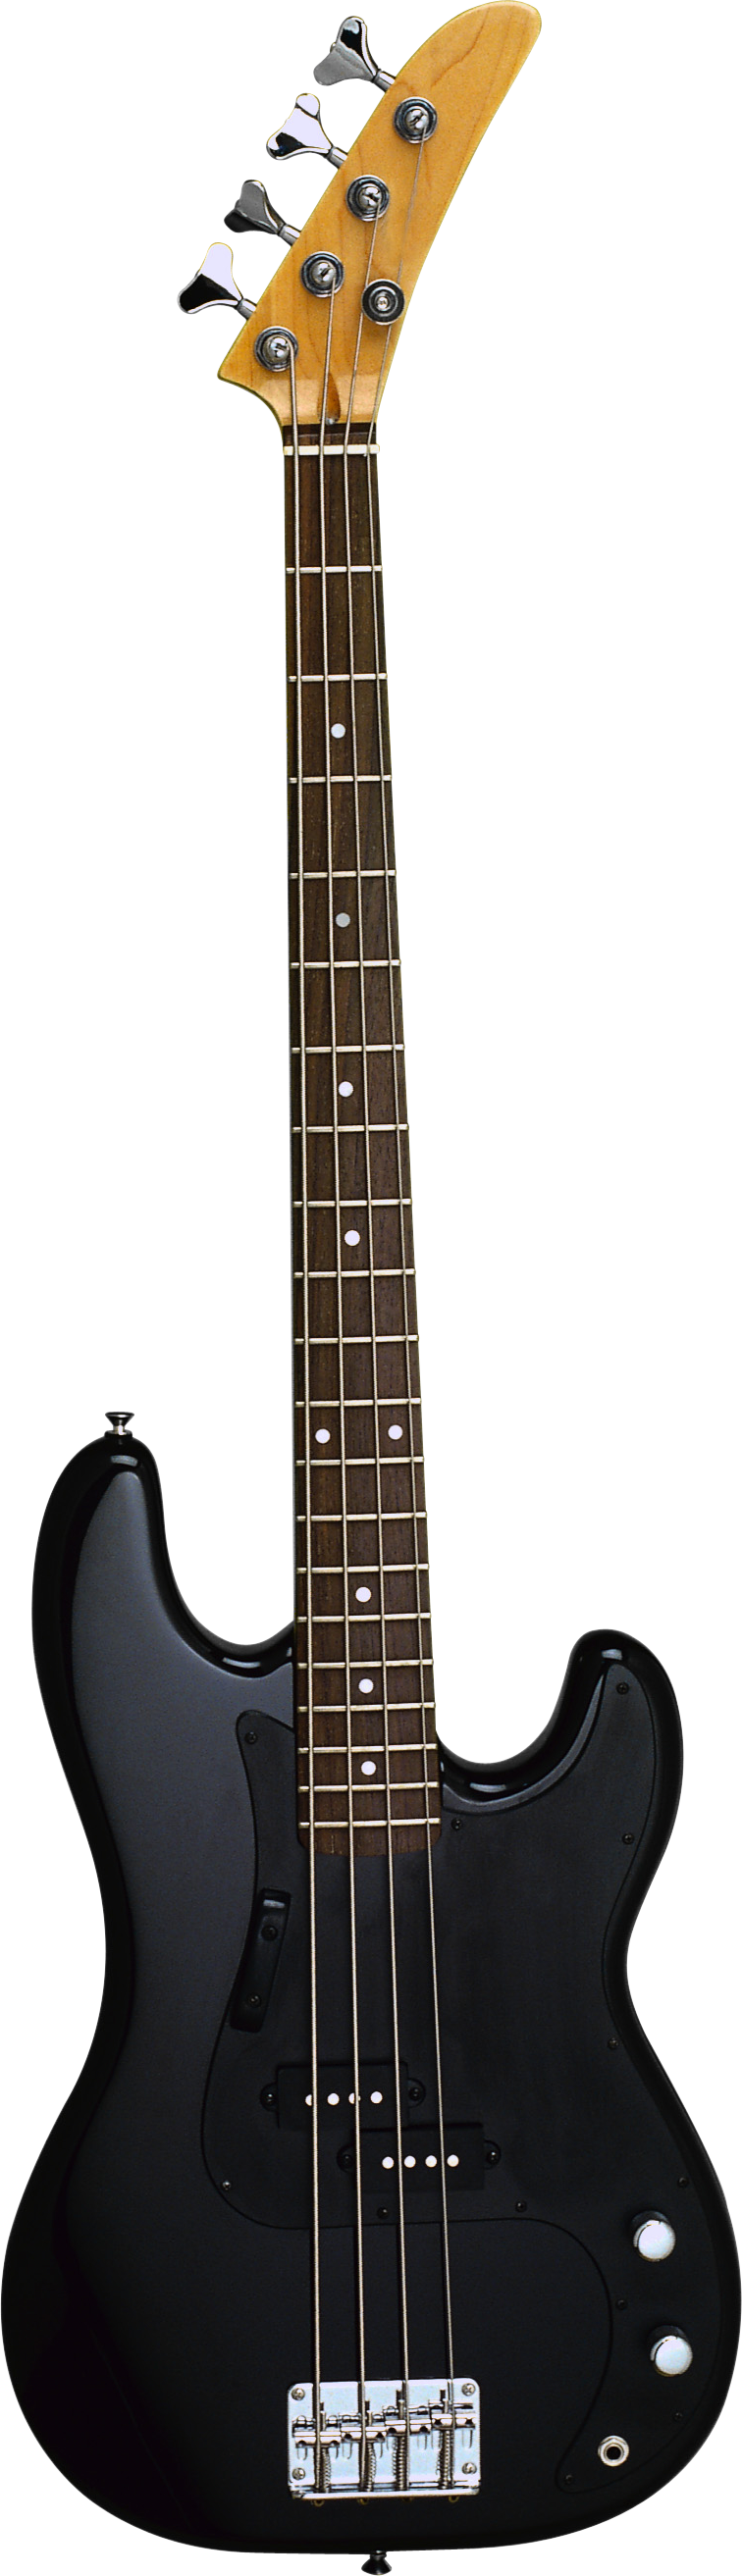 Black Electric Guitar Background PNG Image